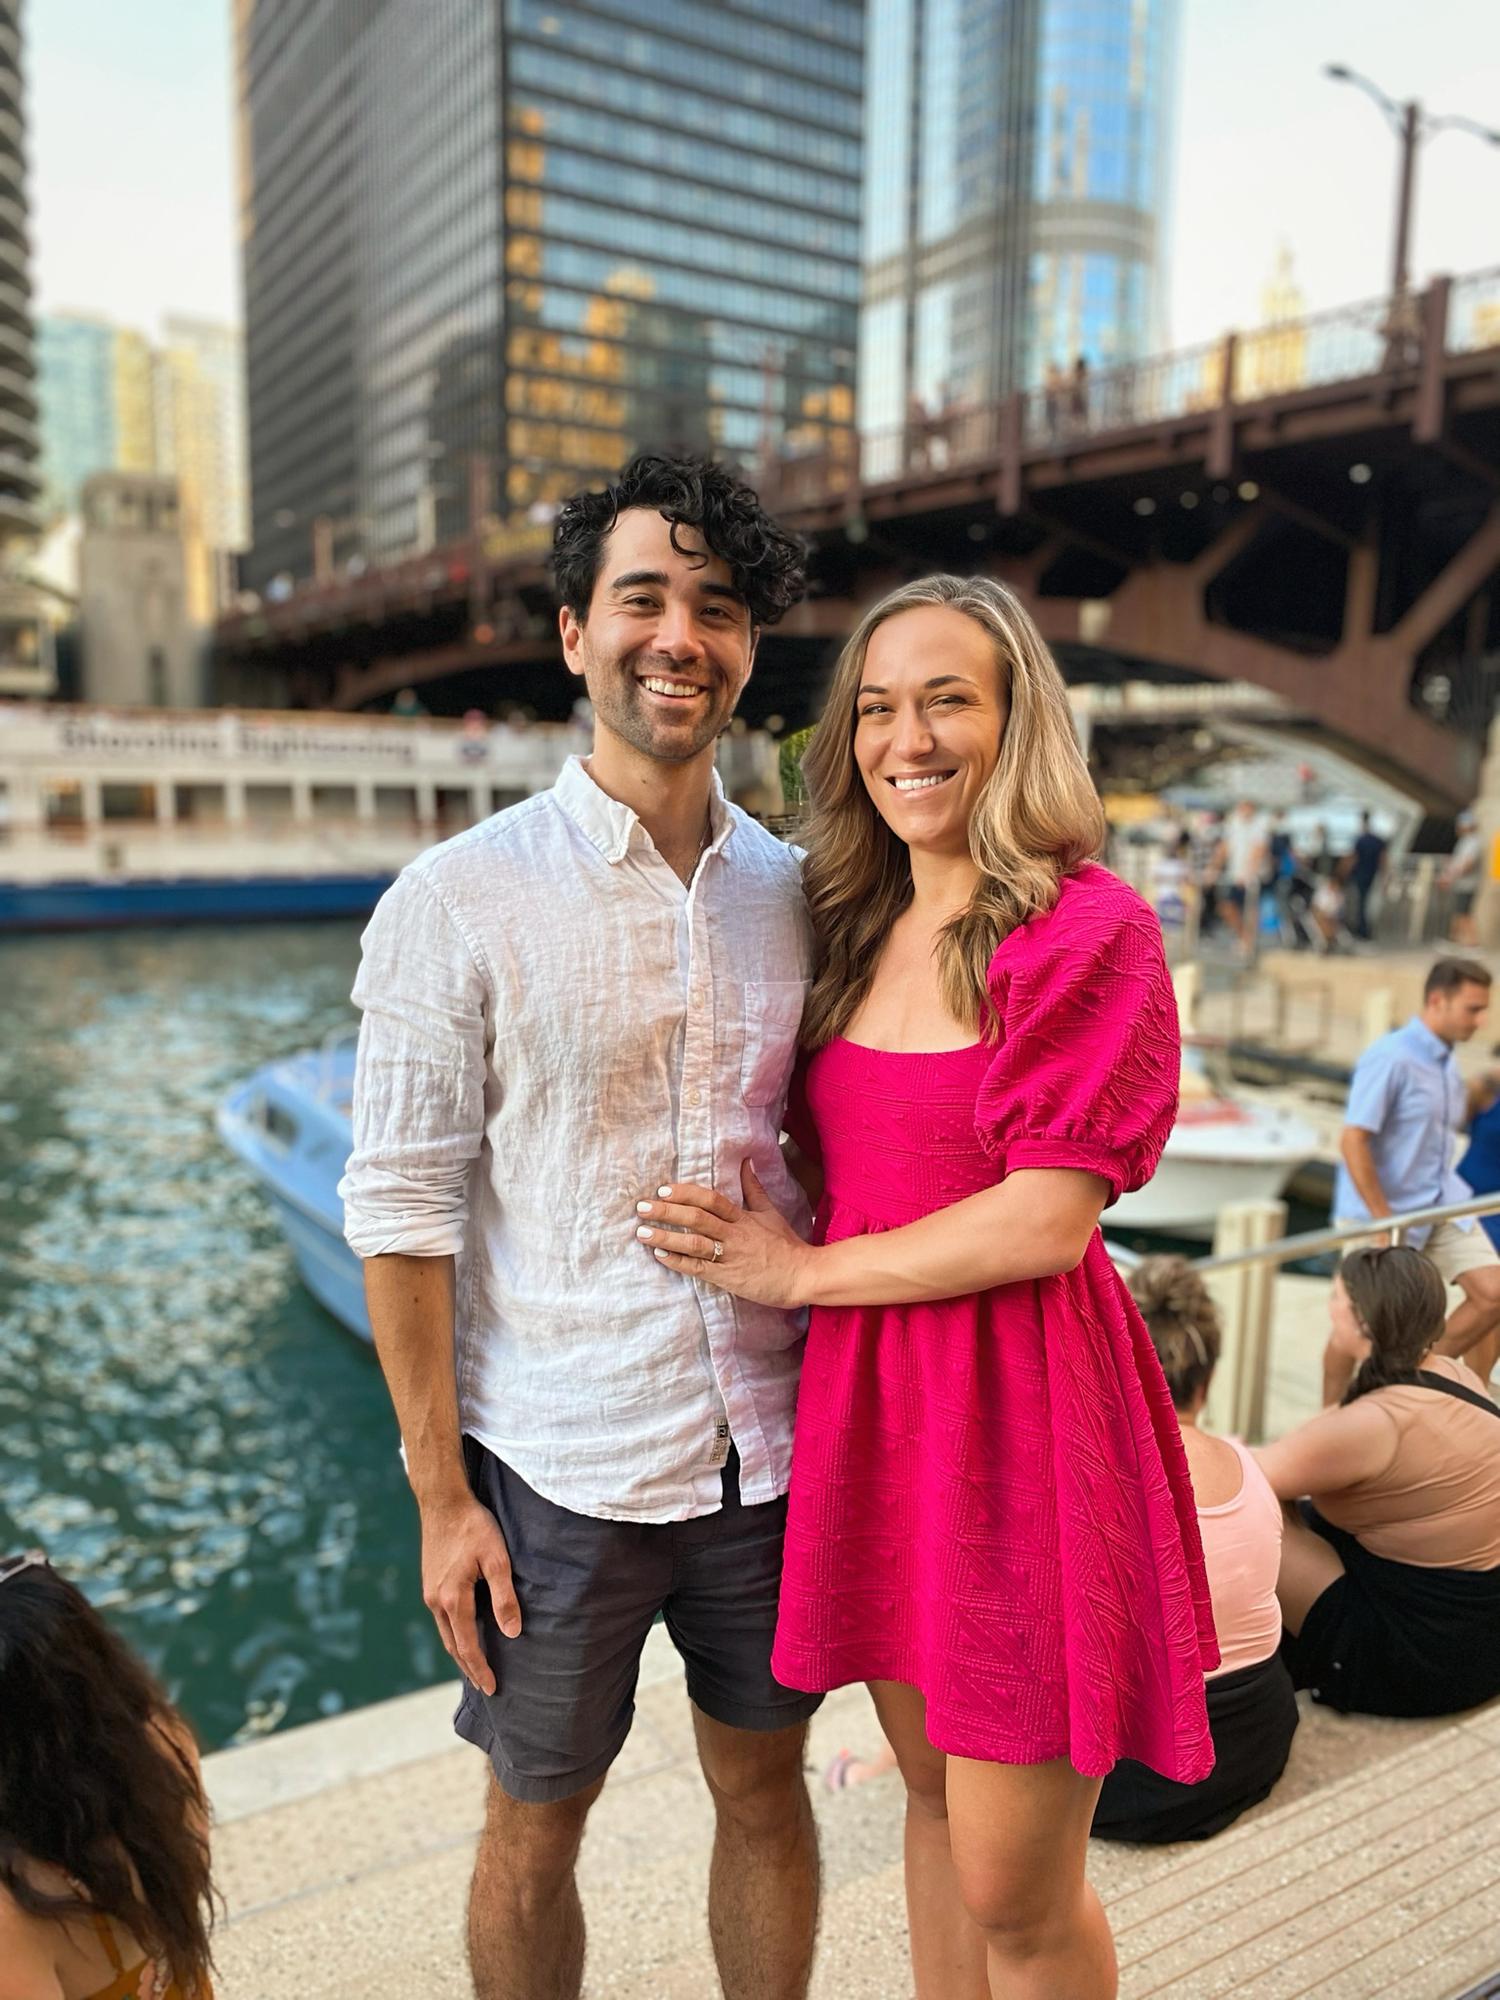 Celebrating the engagement on Chicago’s riverwalk.